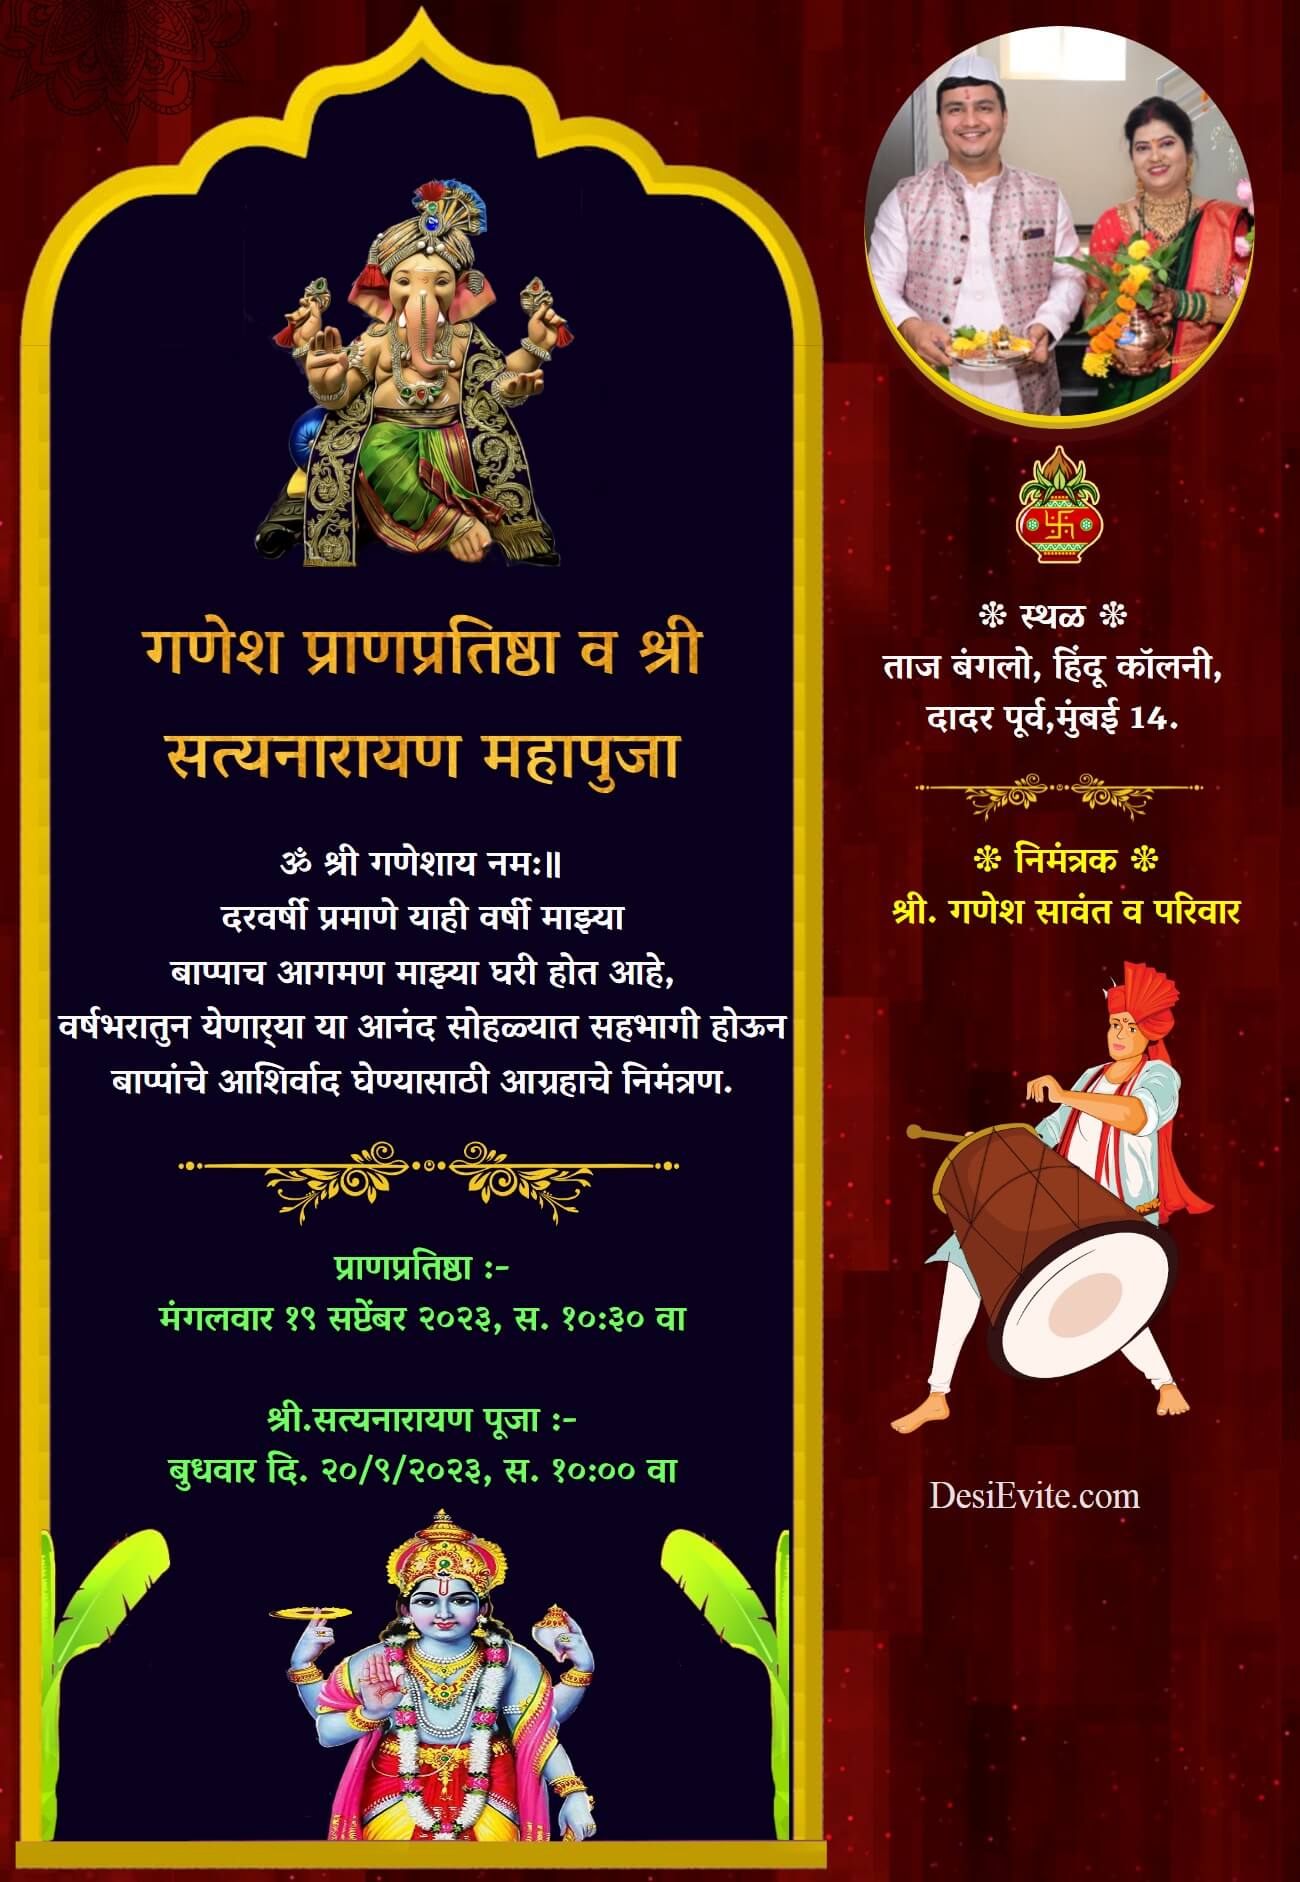 Ganesh sthapna and satyanarayan puja invitation card